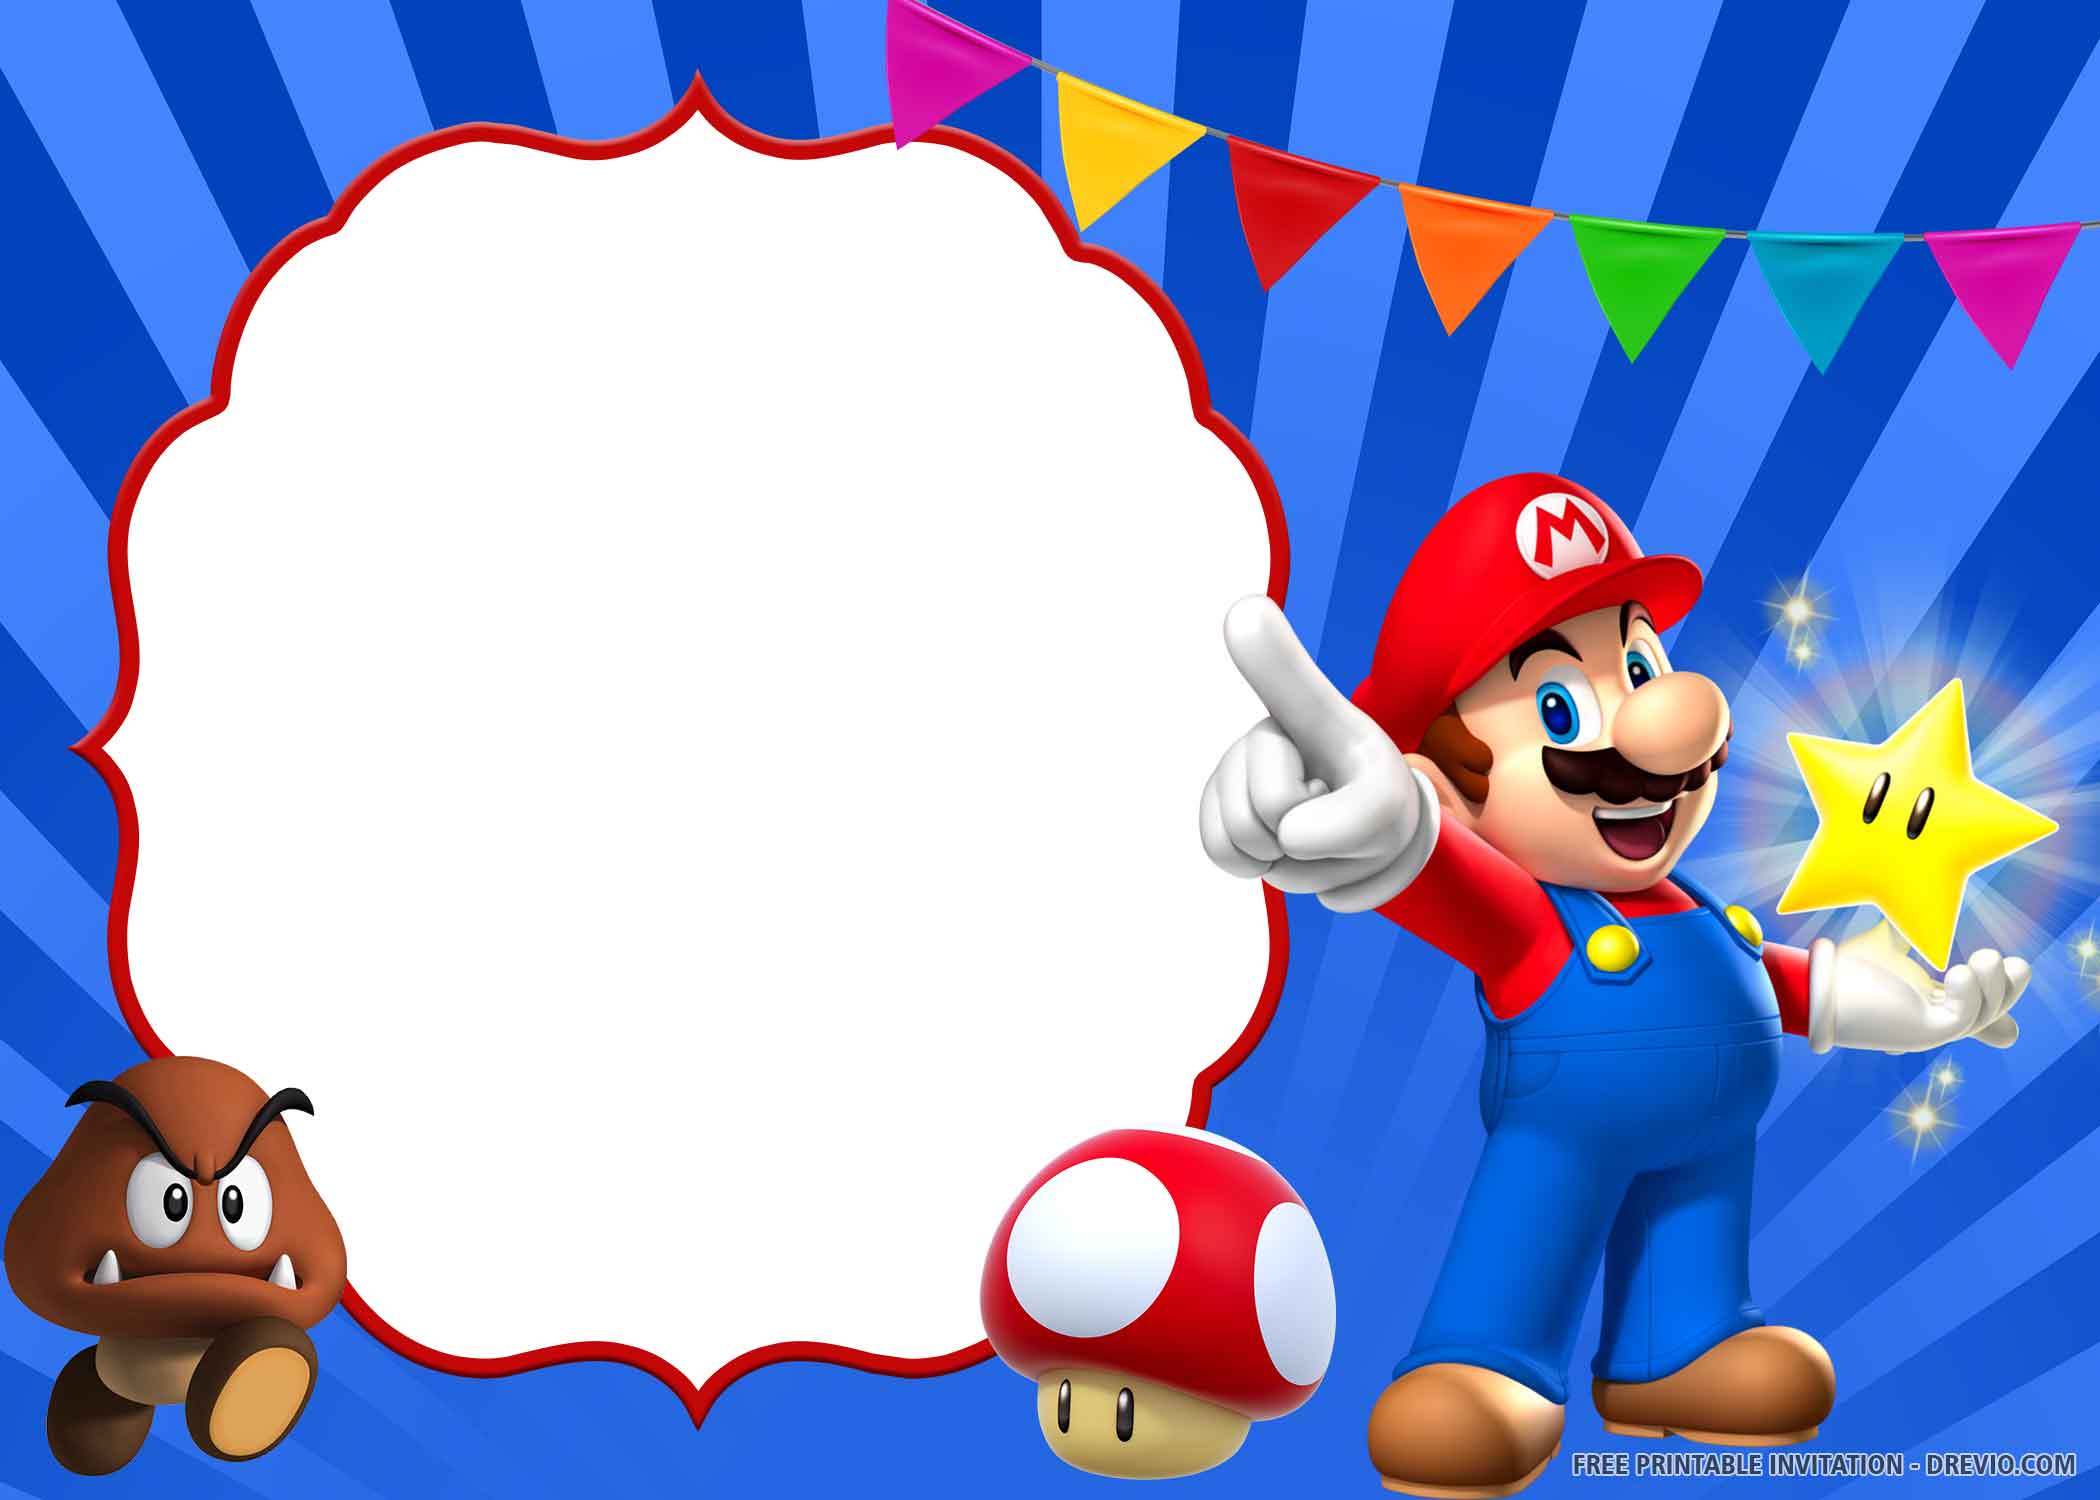  FREE PRINTABLE Super Mario Birthday Invitation Templates Download 